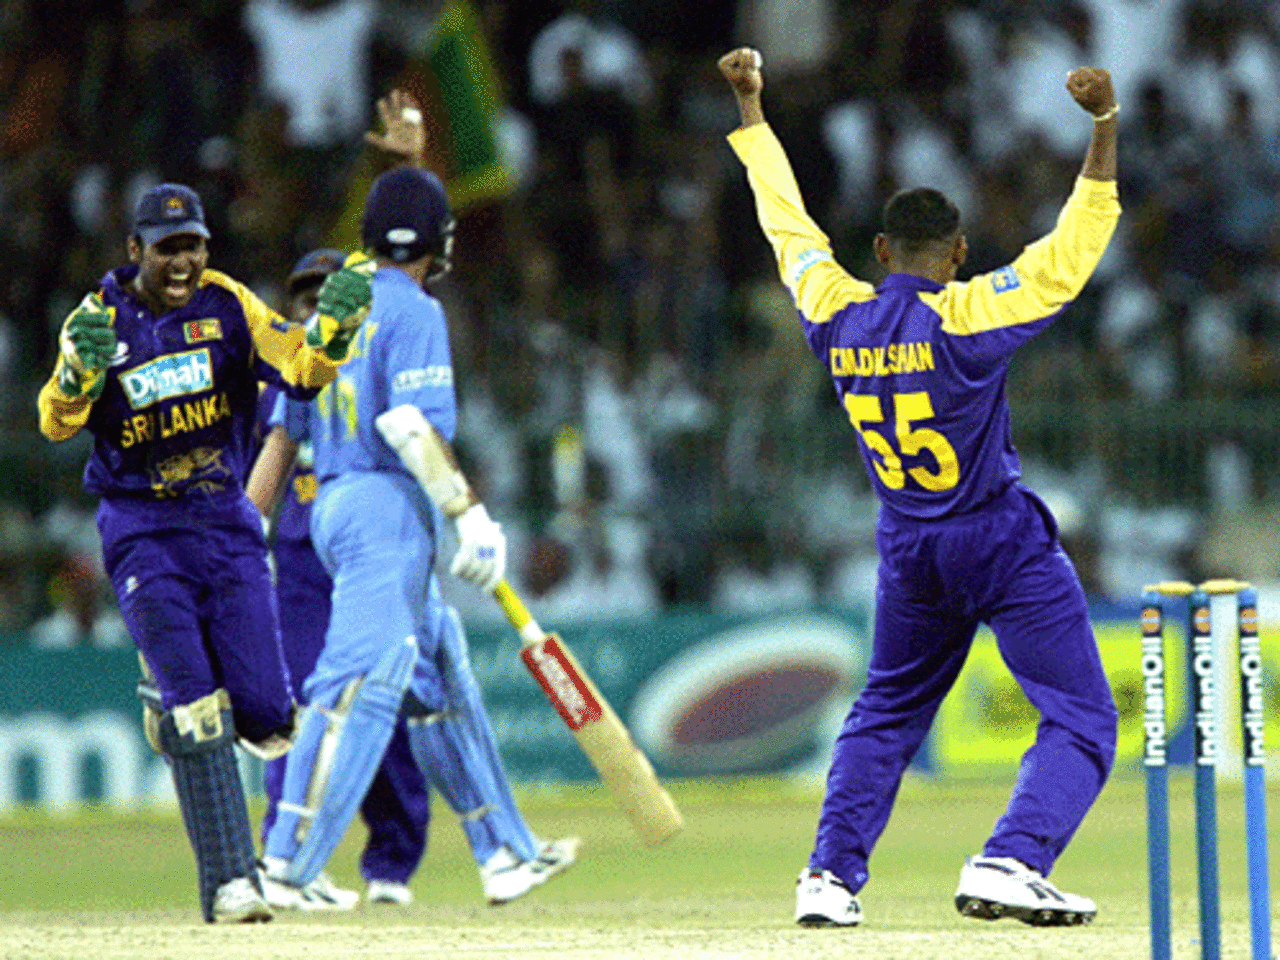 Tillakaratne Dilshan and Kumar Sangakkara celebrate after Sourav Ganguly is given lbw, India v Sri Lanka, Premadasa Stadium, August 9, 2005